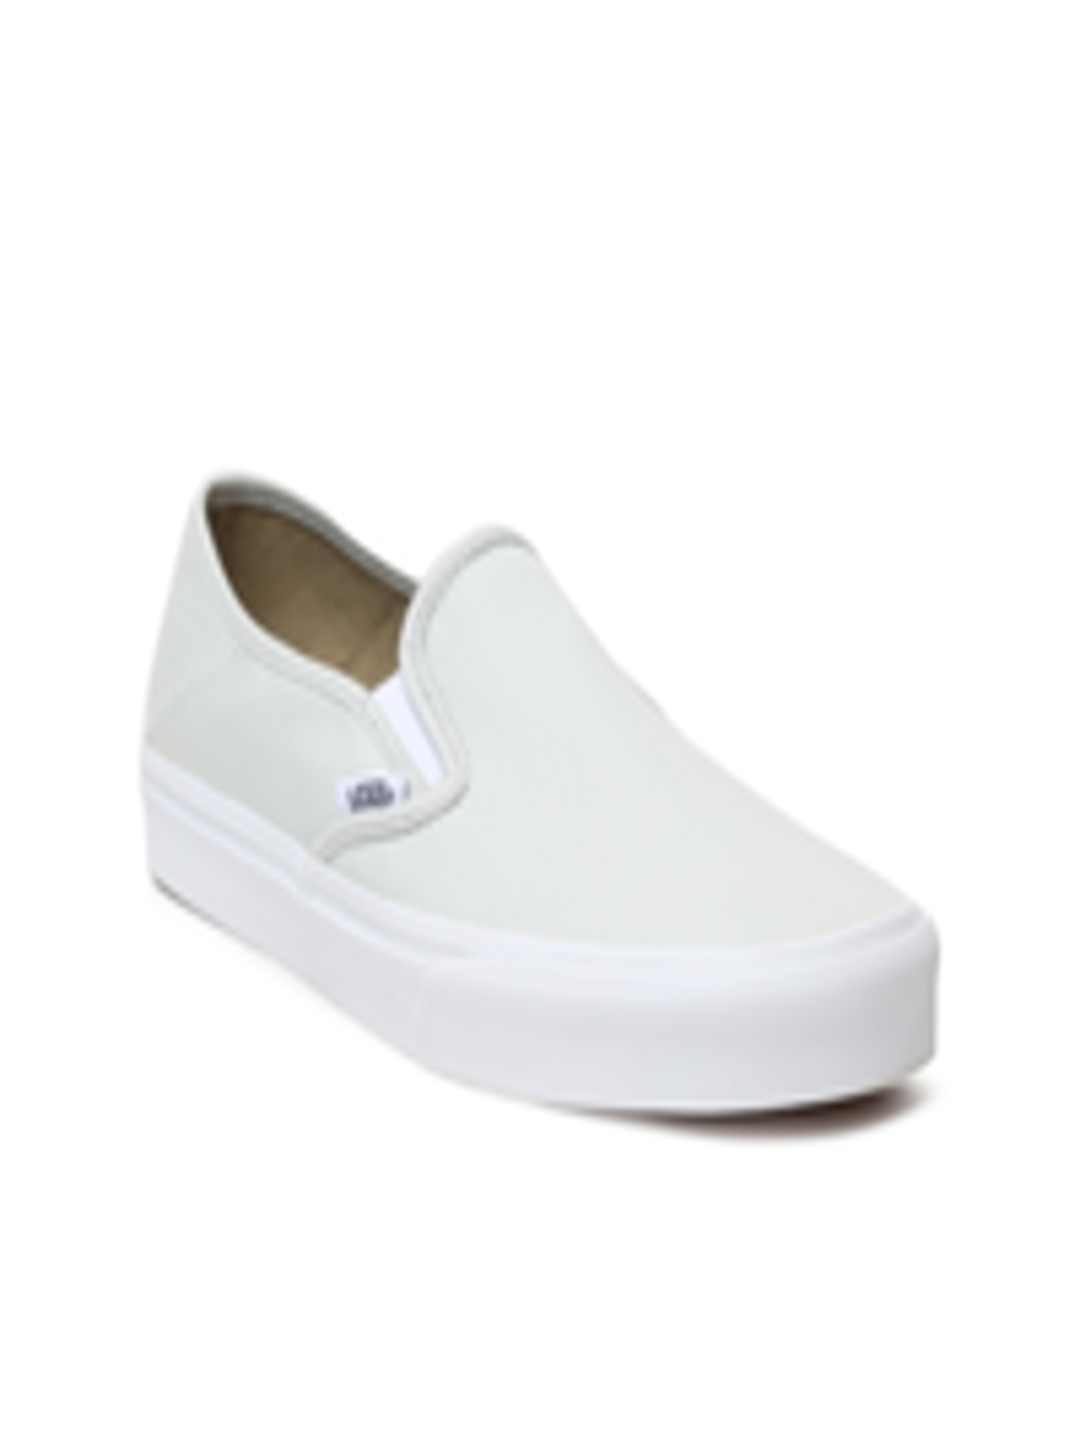 Buy Vans Women Beige Slip On SF Sneakers - Casual Shoes for Women ...